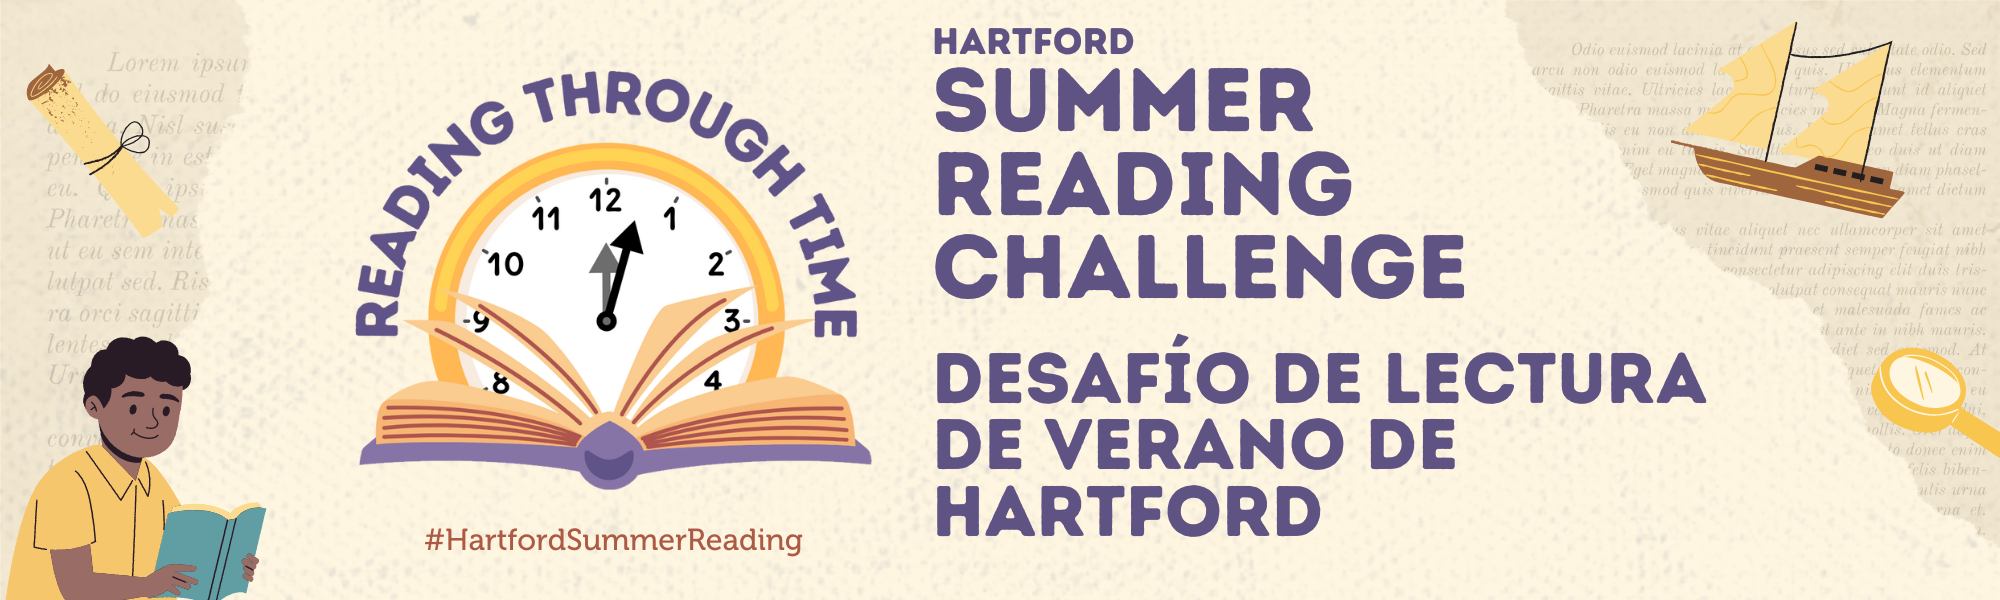 Summer Reading Challenge: 3-2-1 Hartford Blastoff